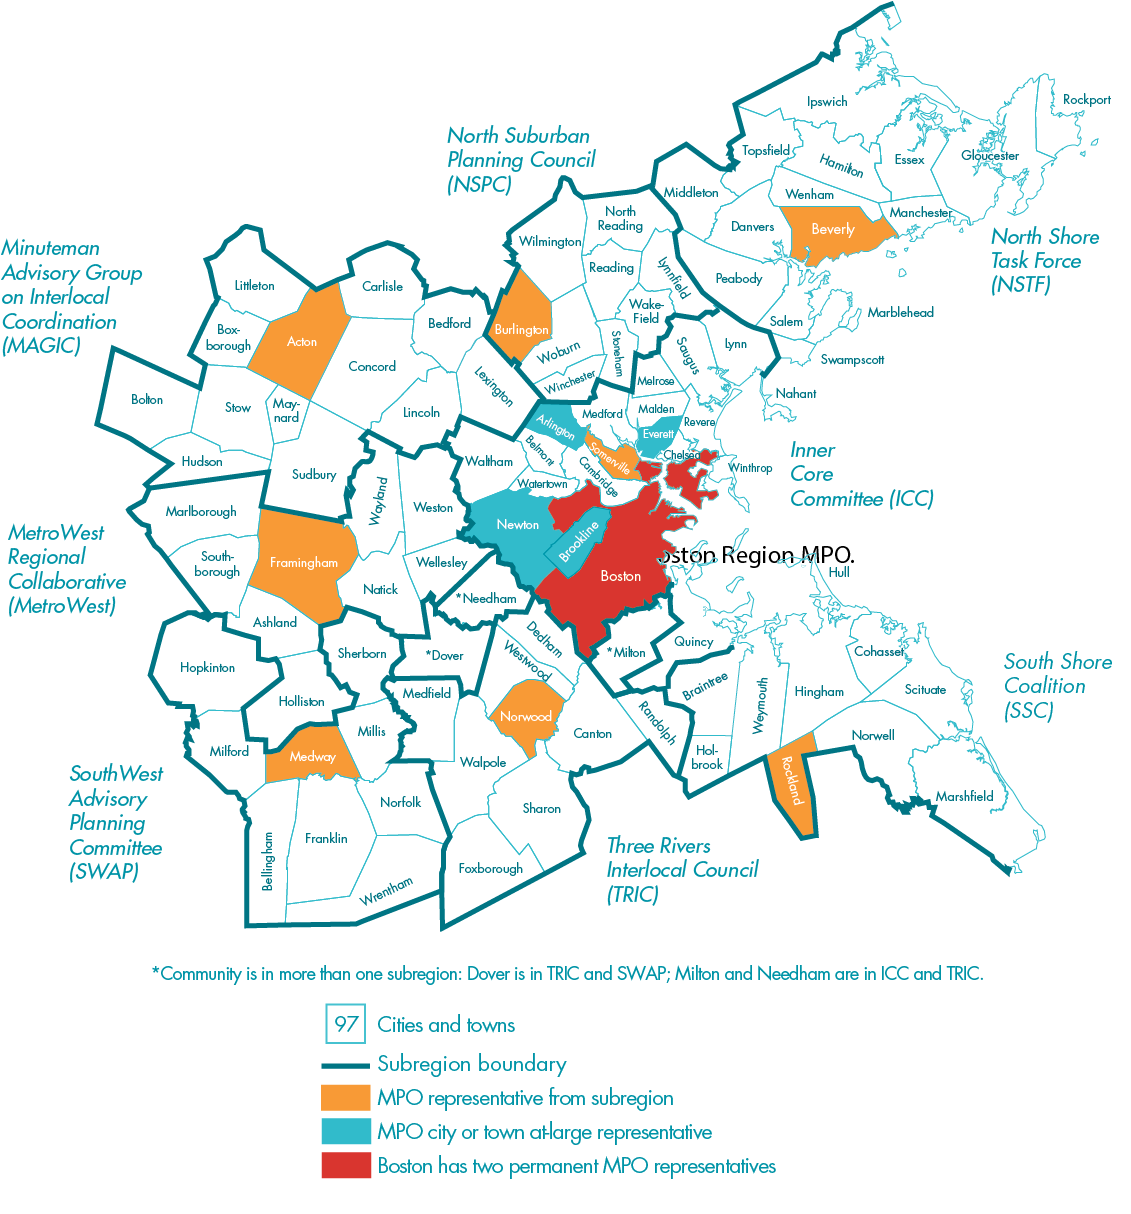 BOSTON REGION METROPOLITAN PLANNING ORGANIZATION MUNICIPALITIES
This image is a map of the 97 municipalities that comprise the Boston Region MPO area.